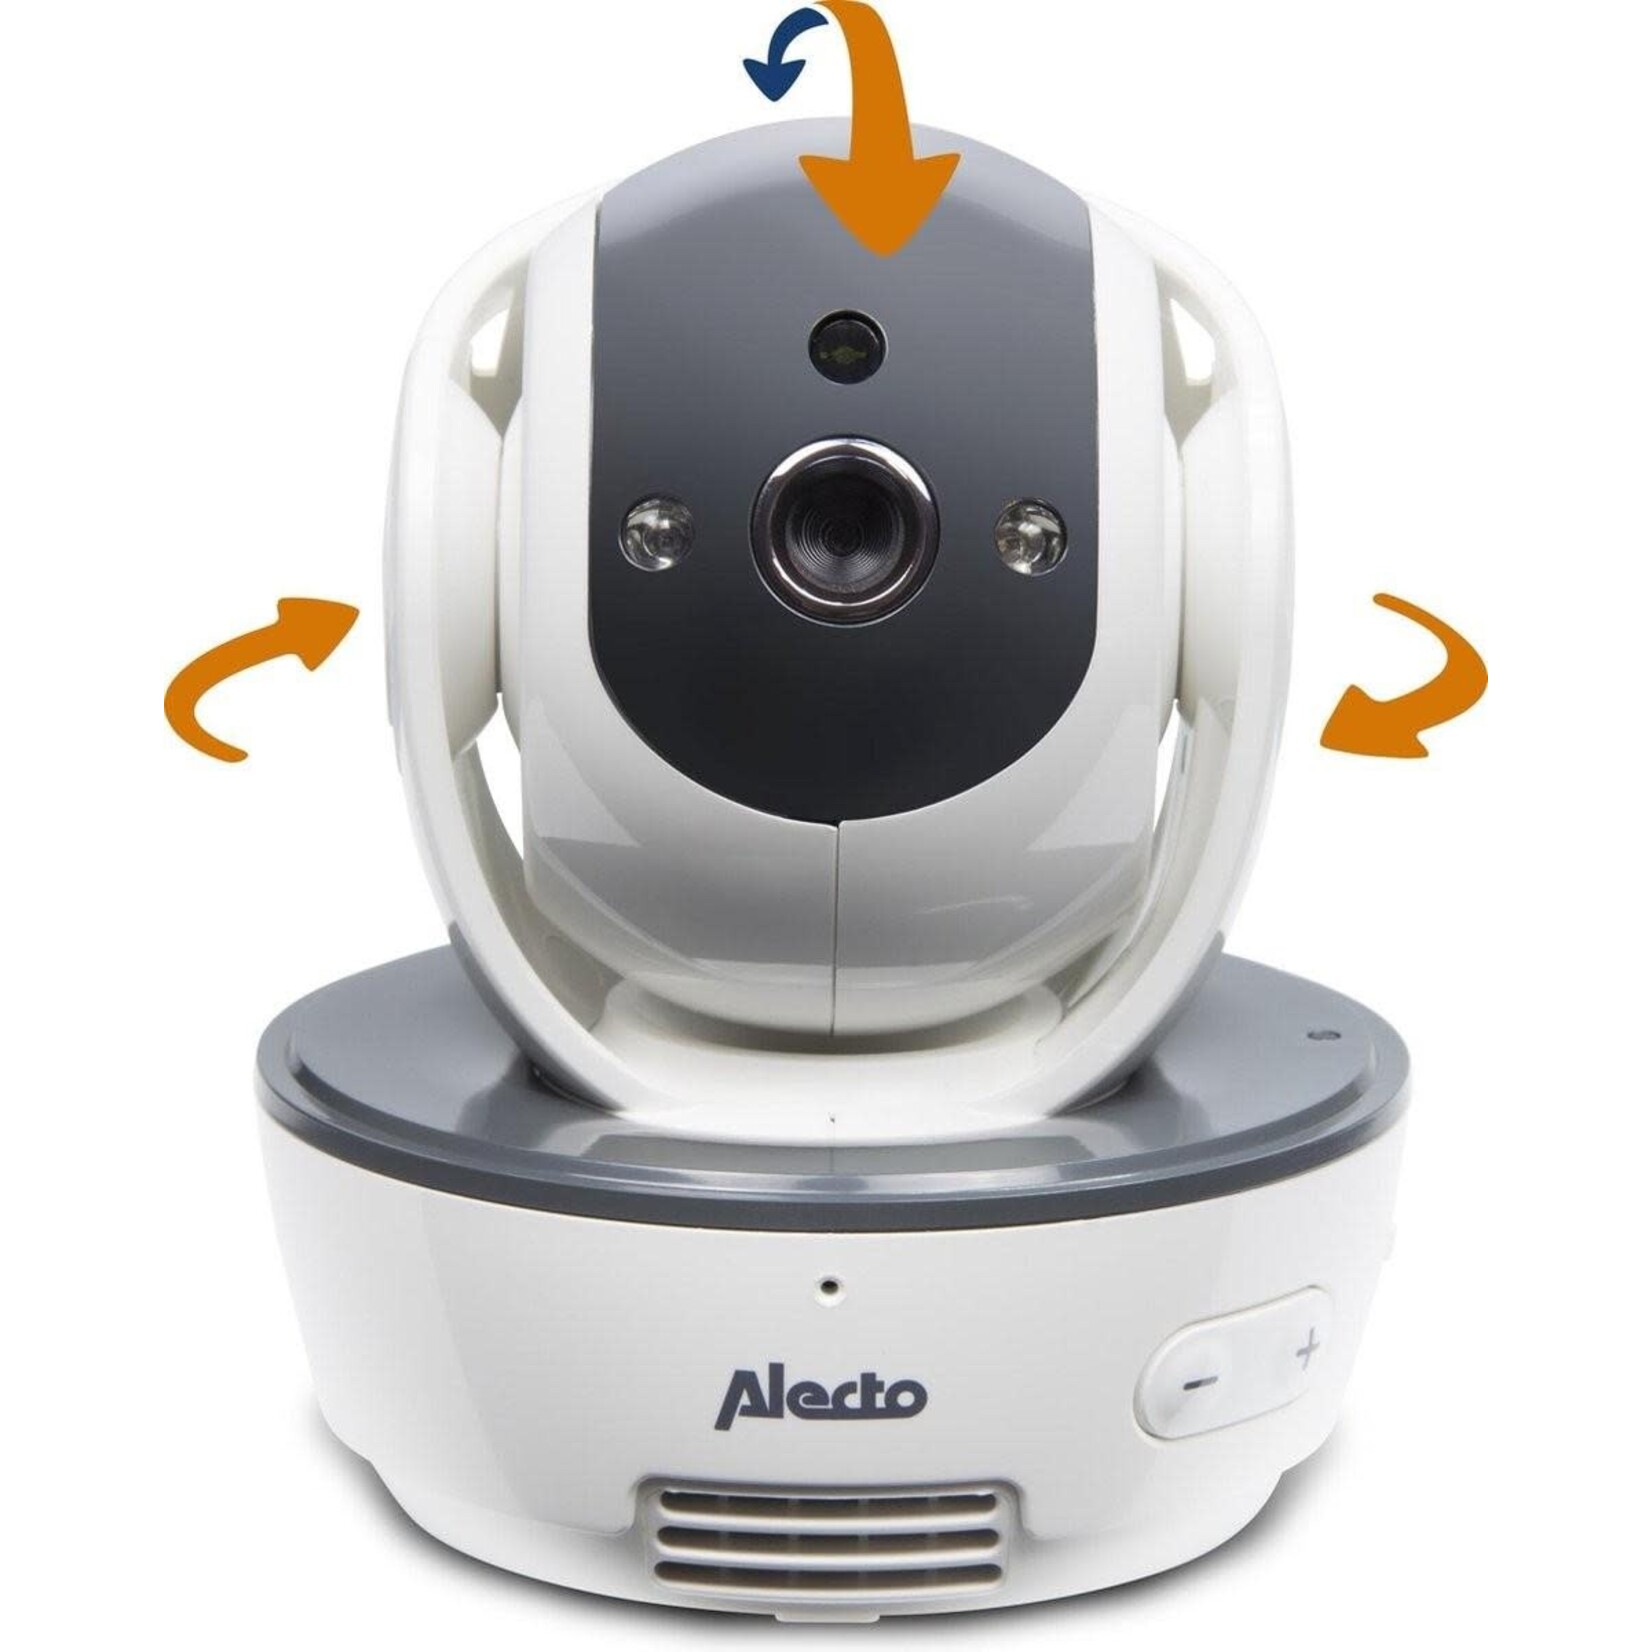 Alecto Babyphone camera rotative écran 4.3